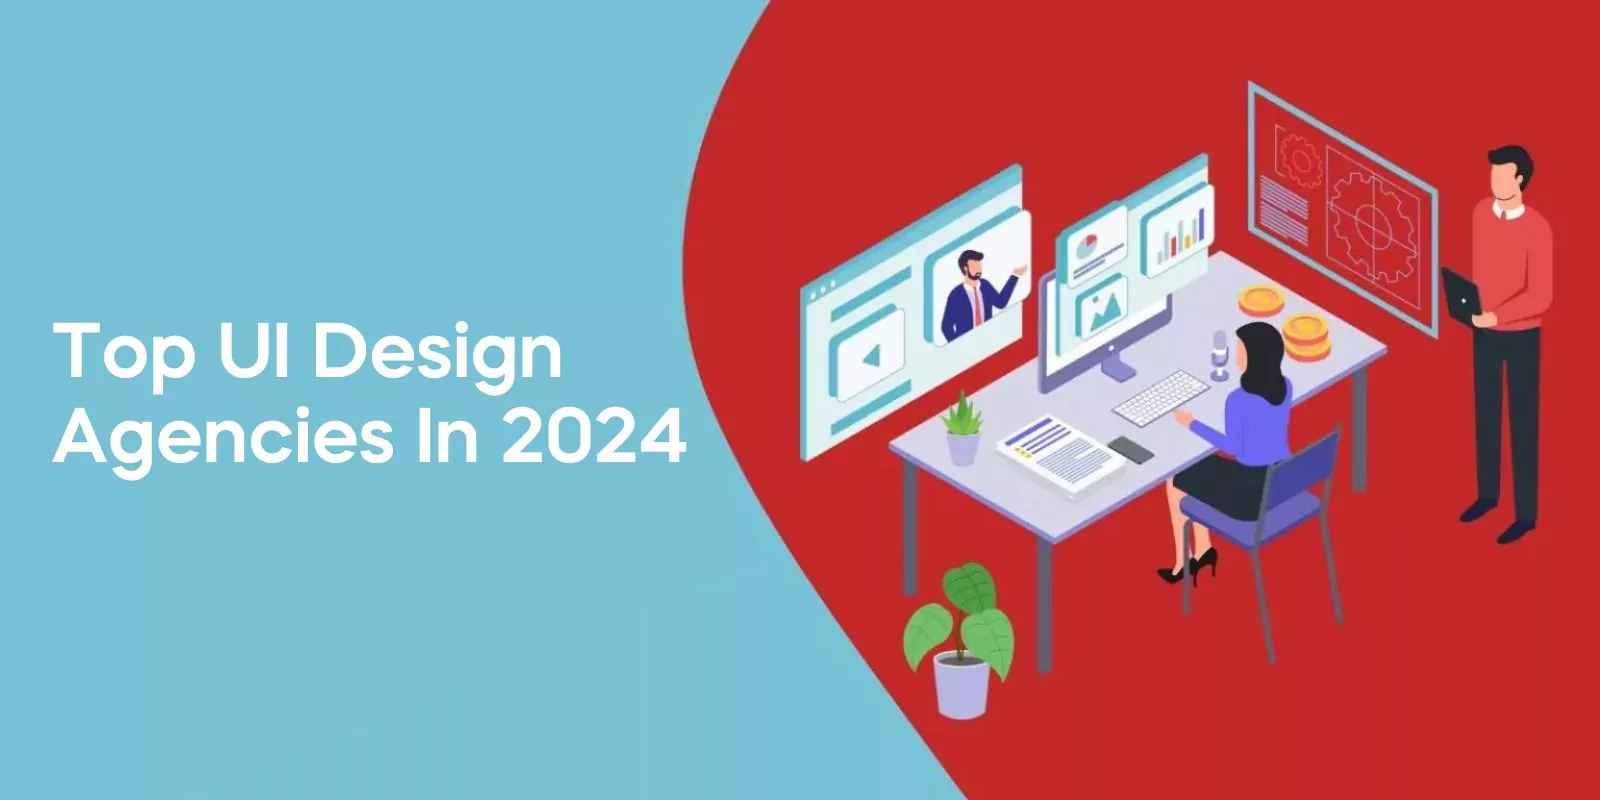 Top UI Design Agencies in 2024